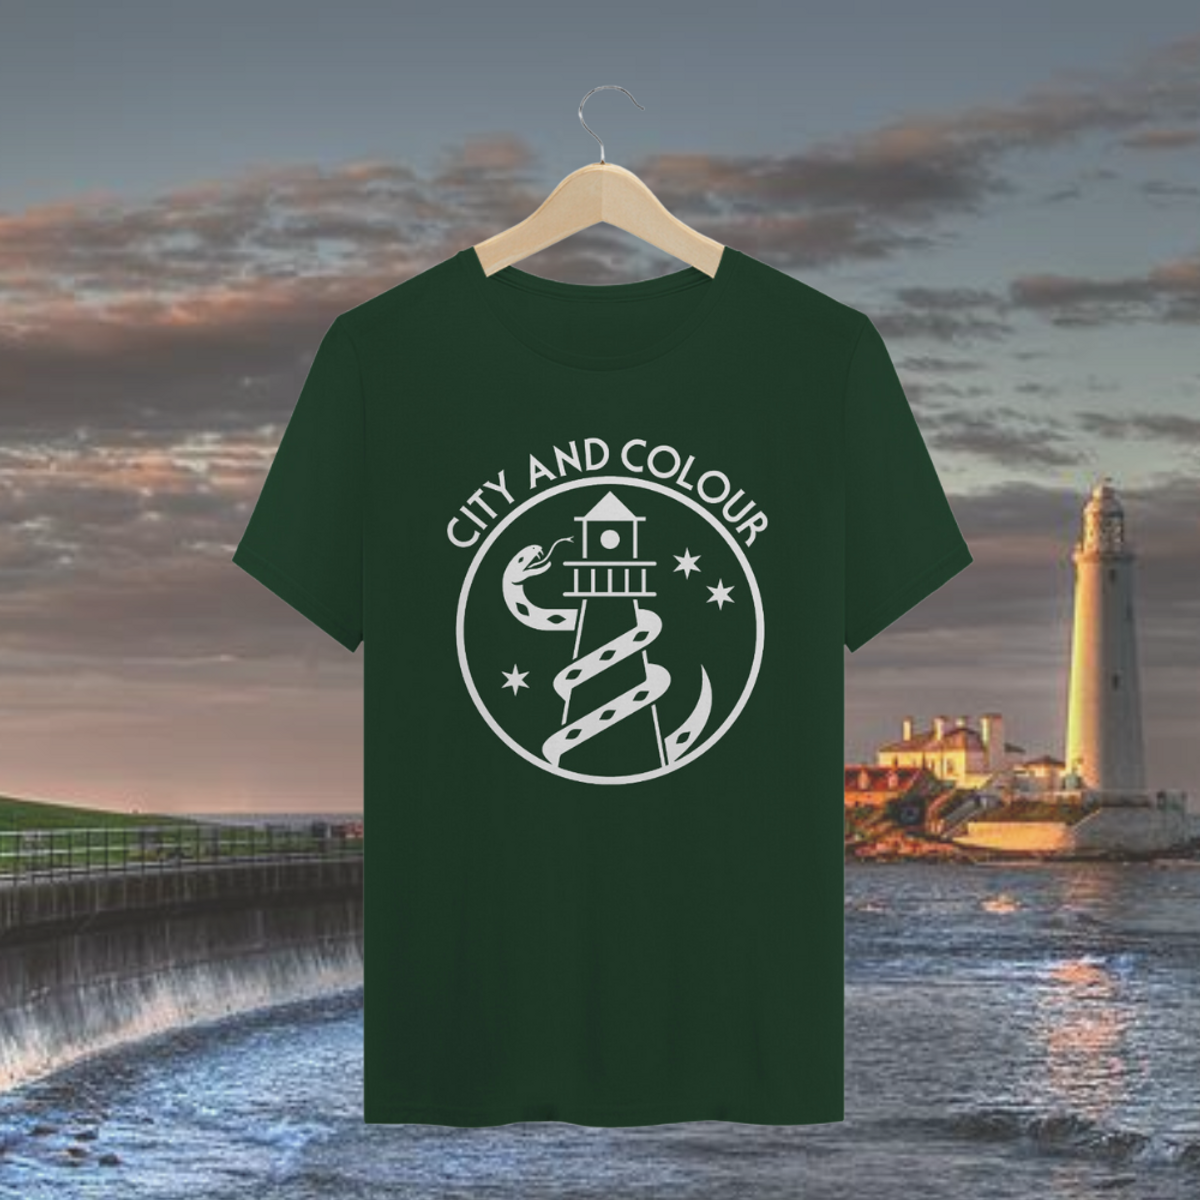 Nome do produto: Camiseta Lighthouse - City and Colour (White Stamp)